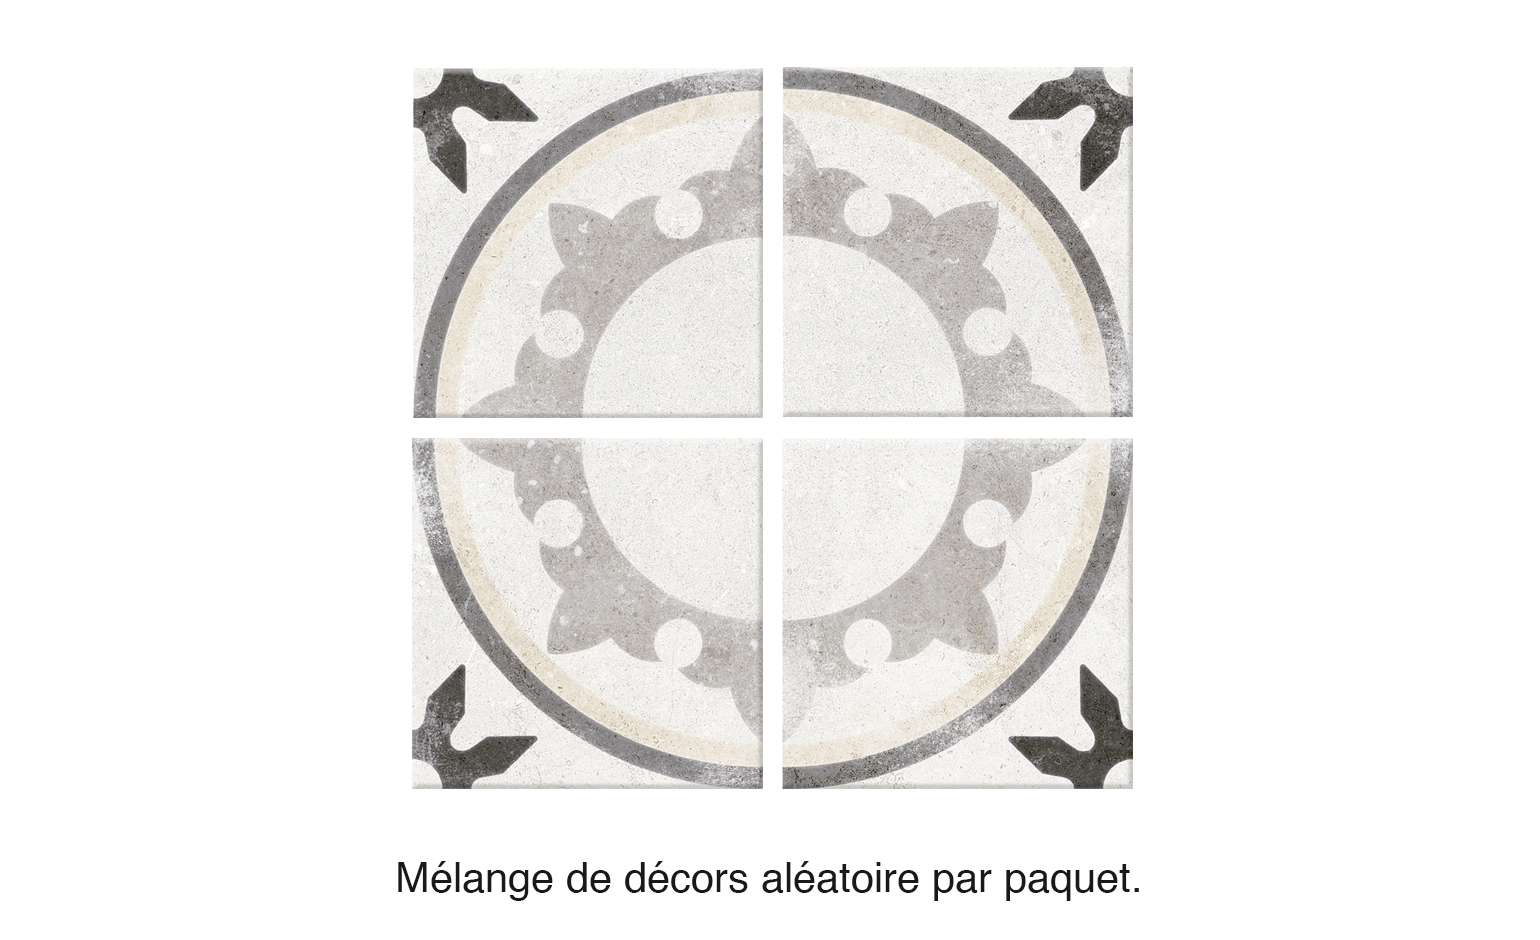 Carrelage EPOQUE, aspect carreau ciment multicolore, dim 20.00 x 20.00 cm